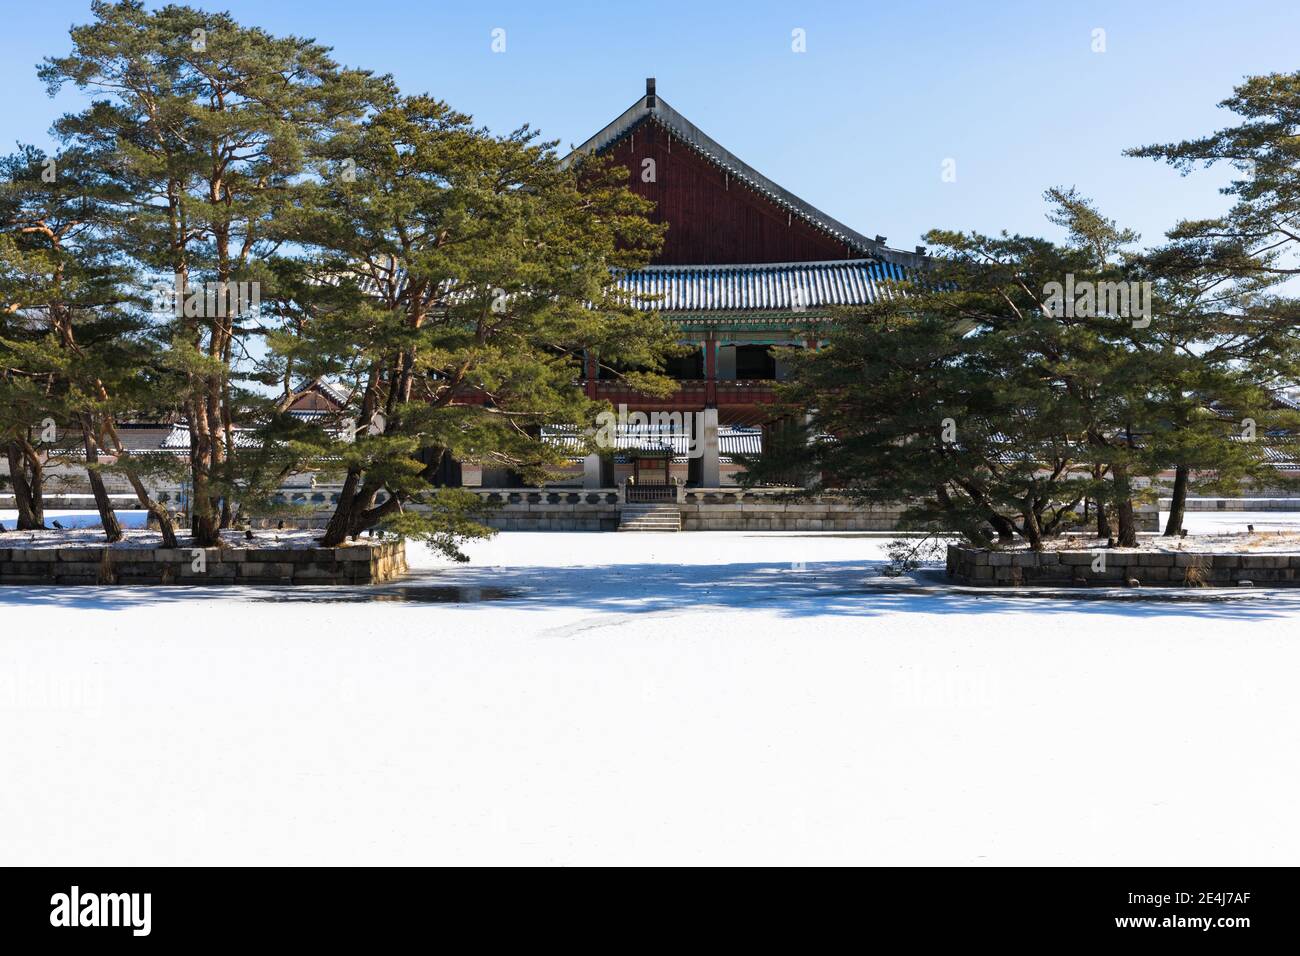 Winter morning scenery in Korea, Gyeonghoeru covered with snow inside Gyeongbokgung Palace. Stock Photo